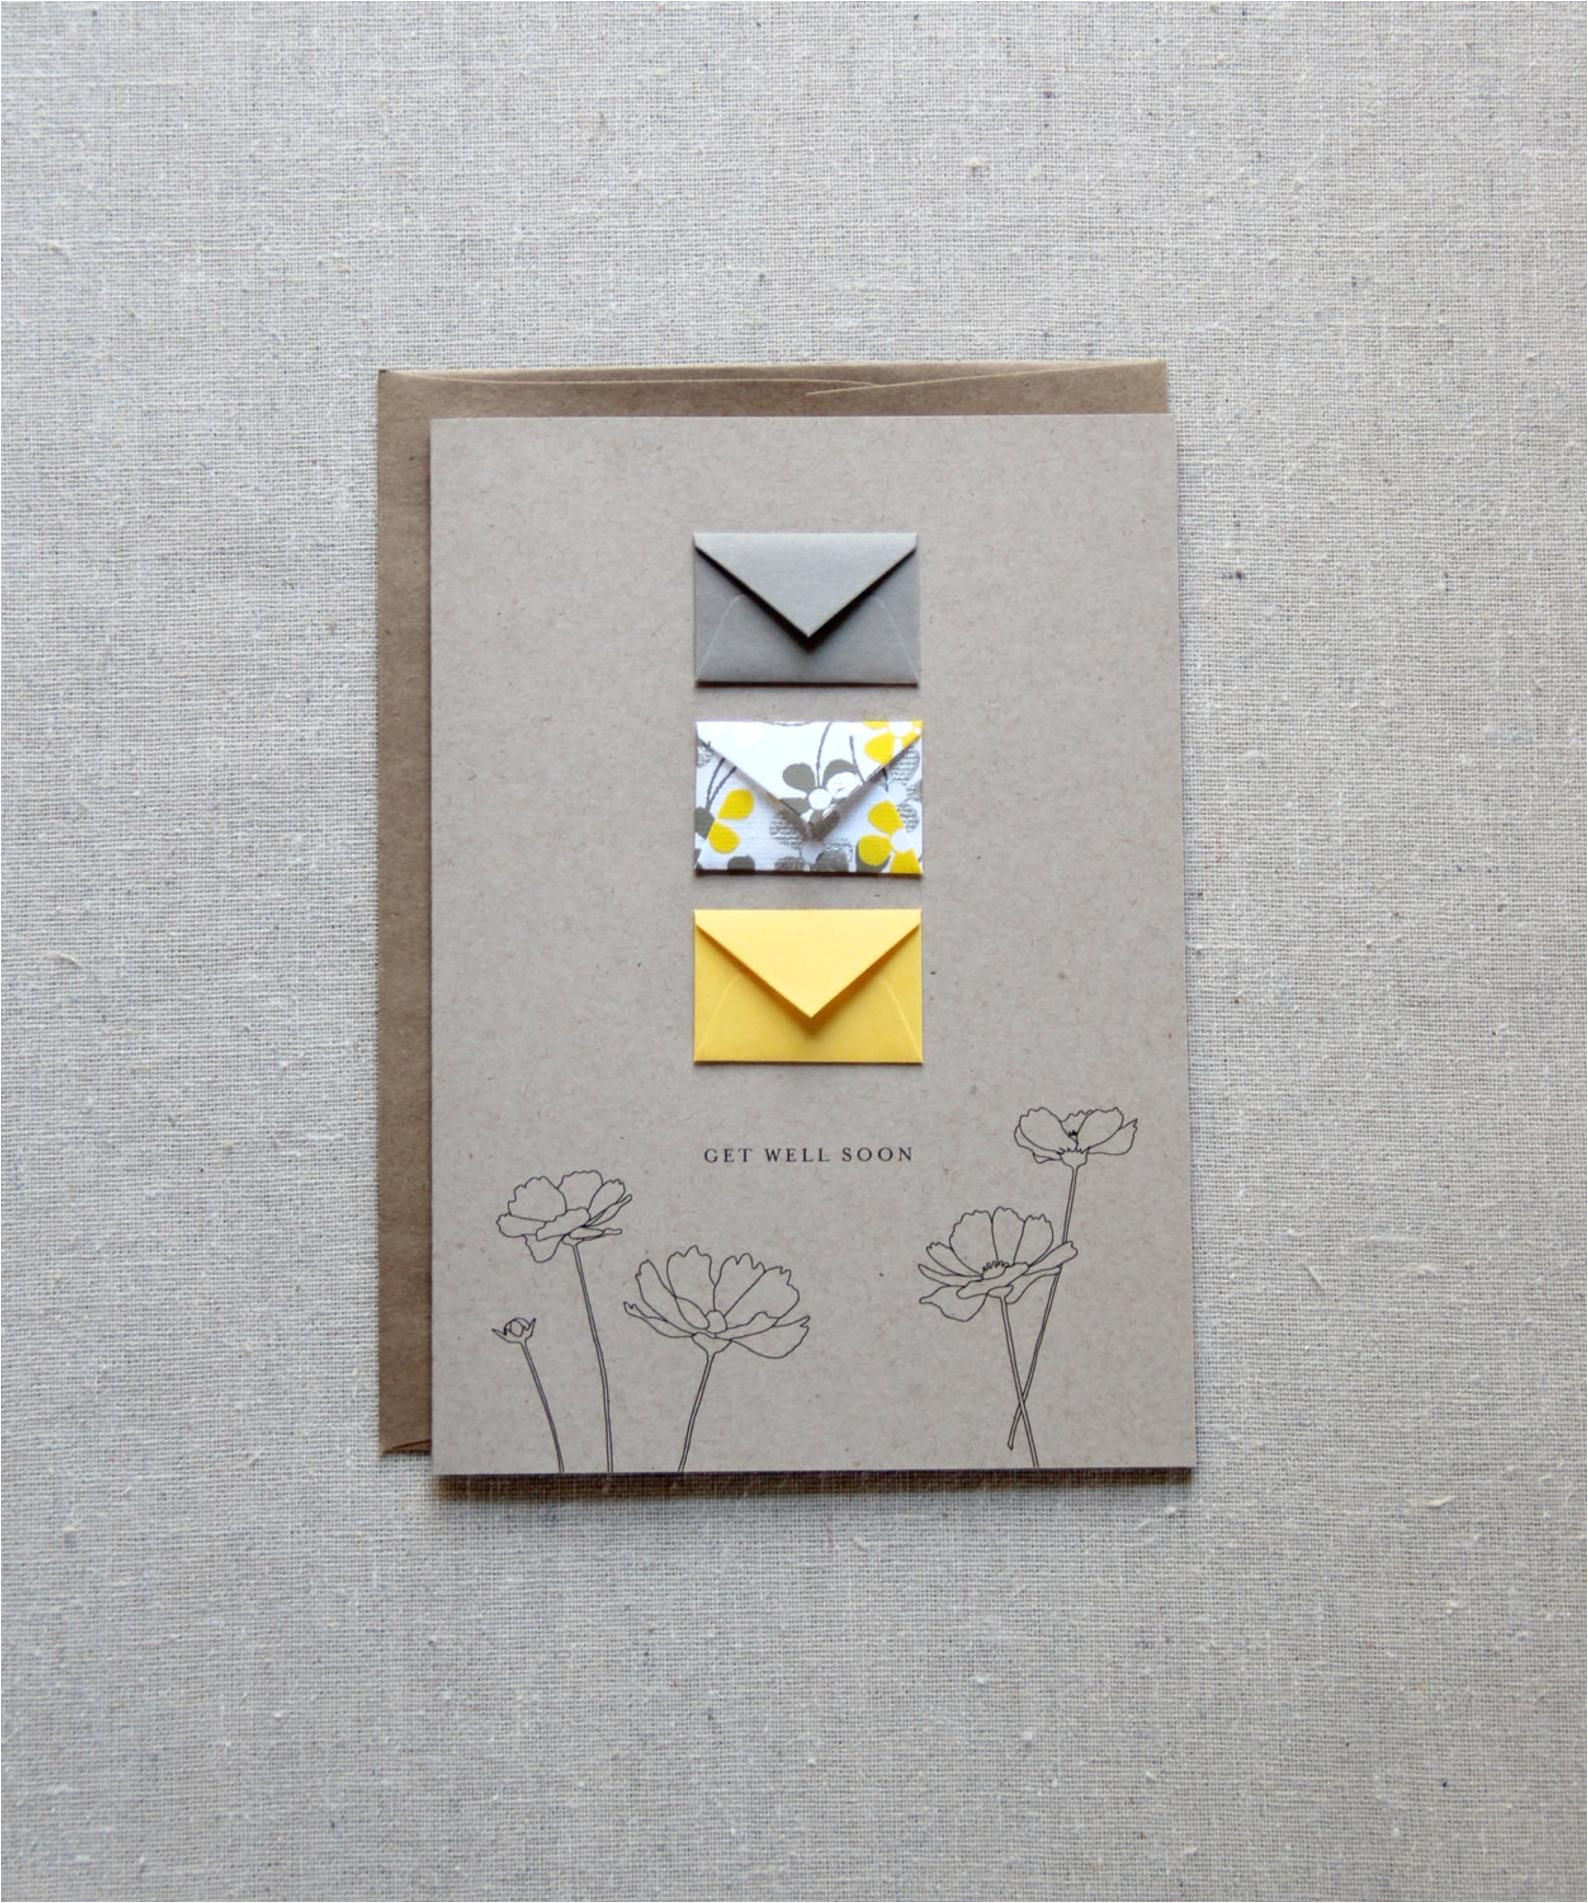 5 X 7 Blank Cards and Envelopes Pin Auf Geschenke